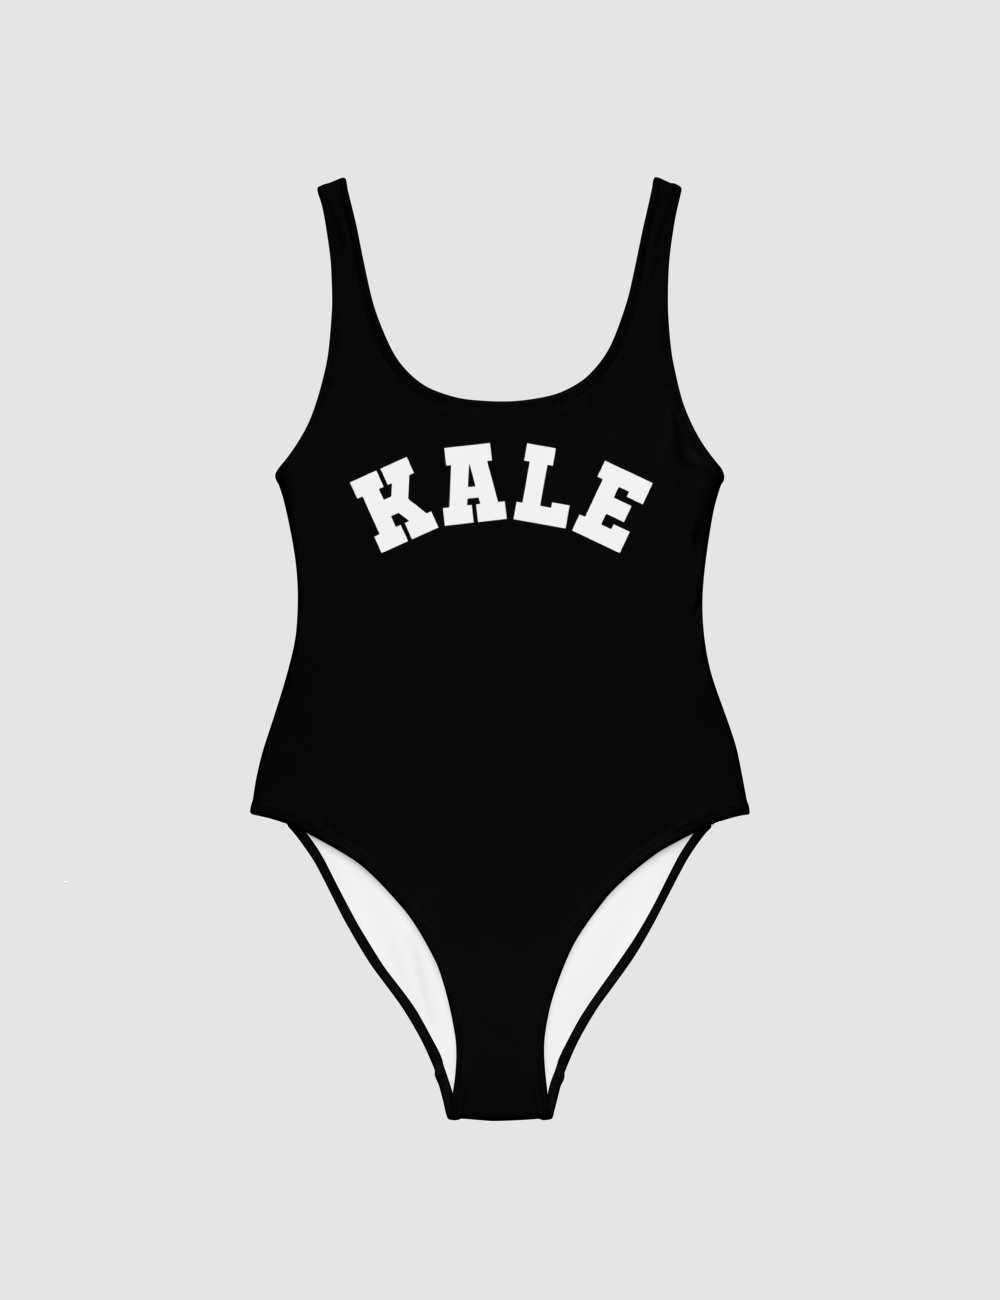 Kale | Women's One-Piece Swimsuit OniTakai